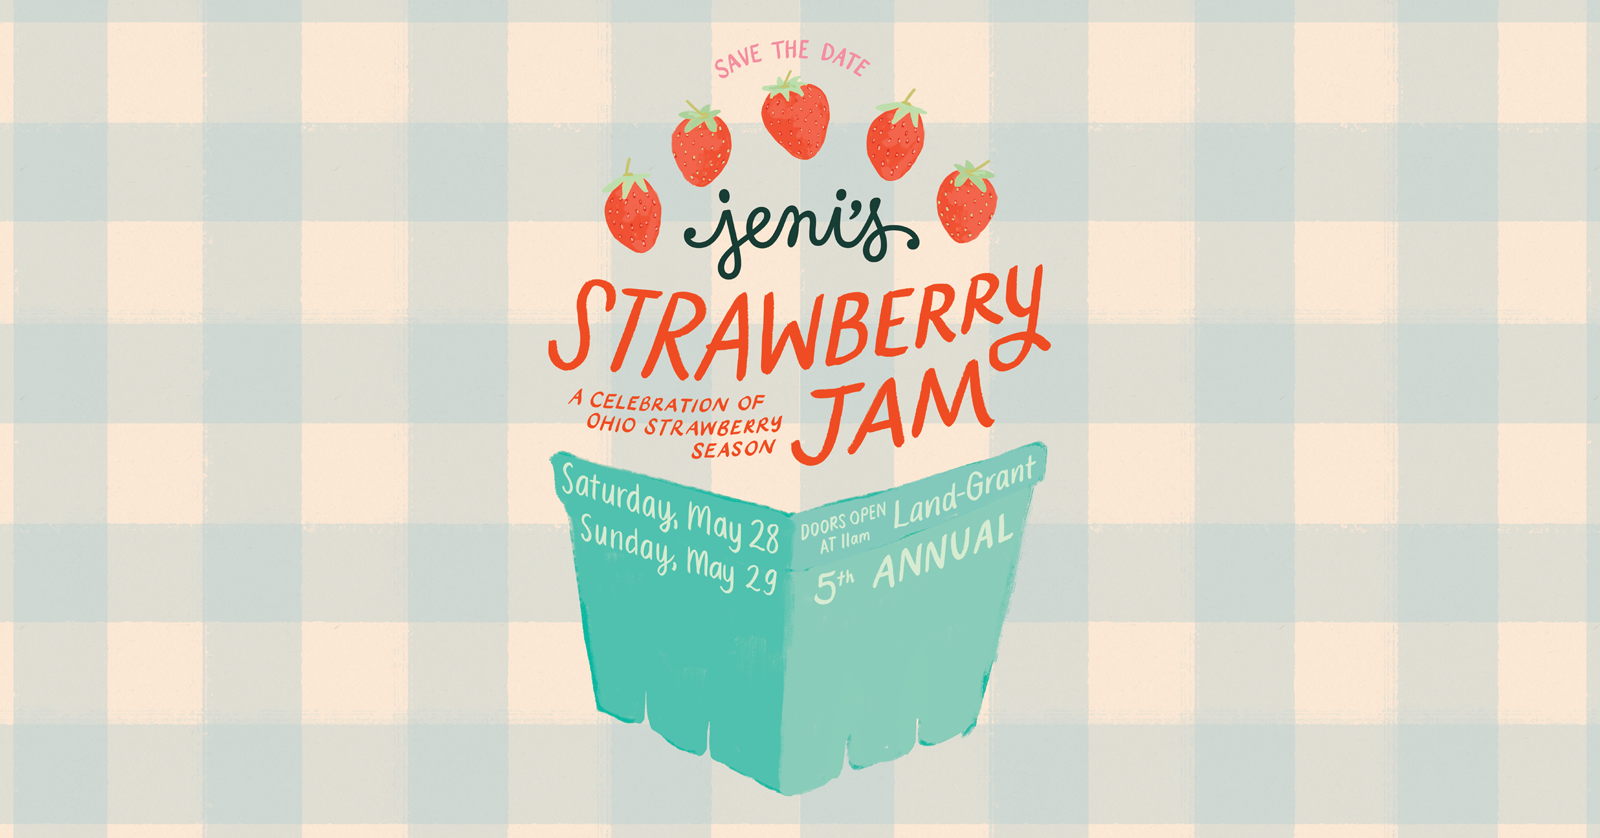 New Jeni’s Splendid Ice Creams Collaboration Beer & The Return of Strawberry Jam Event